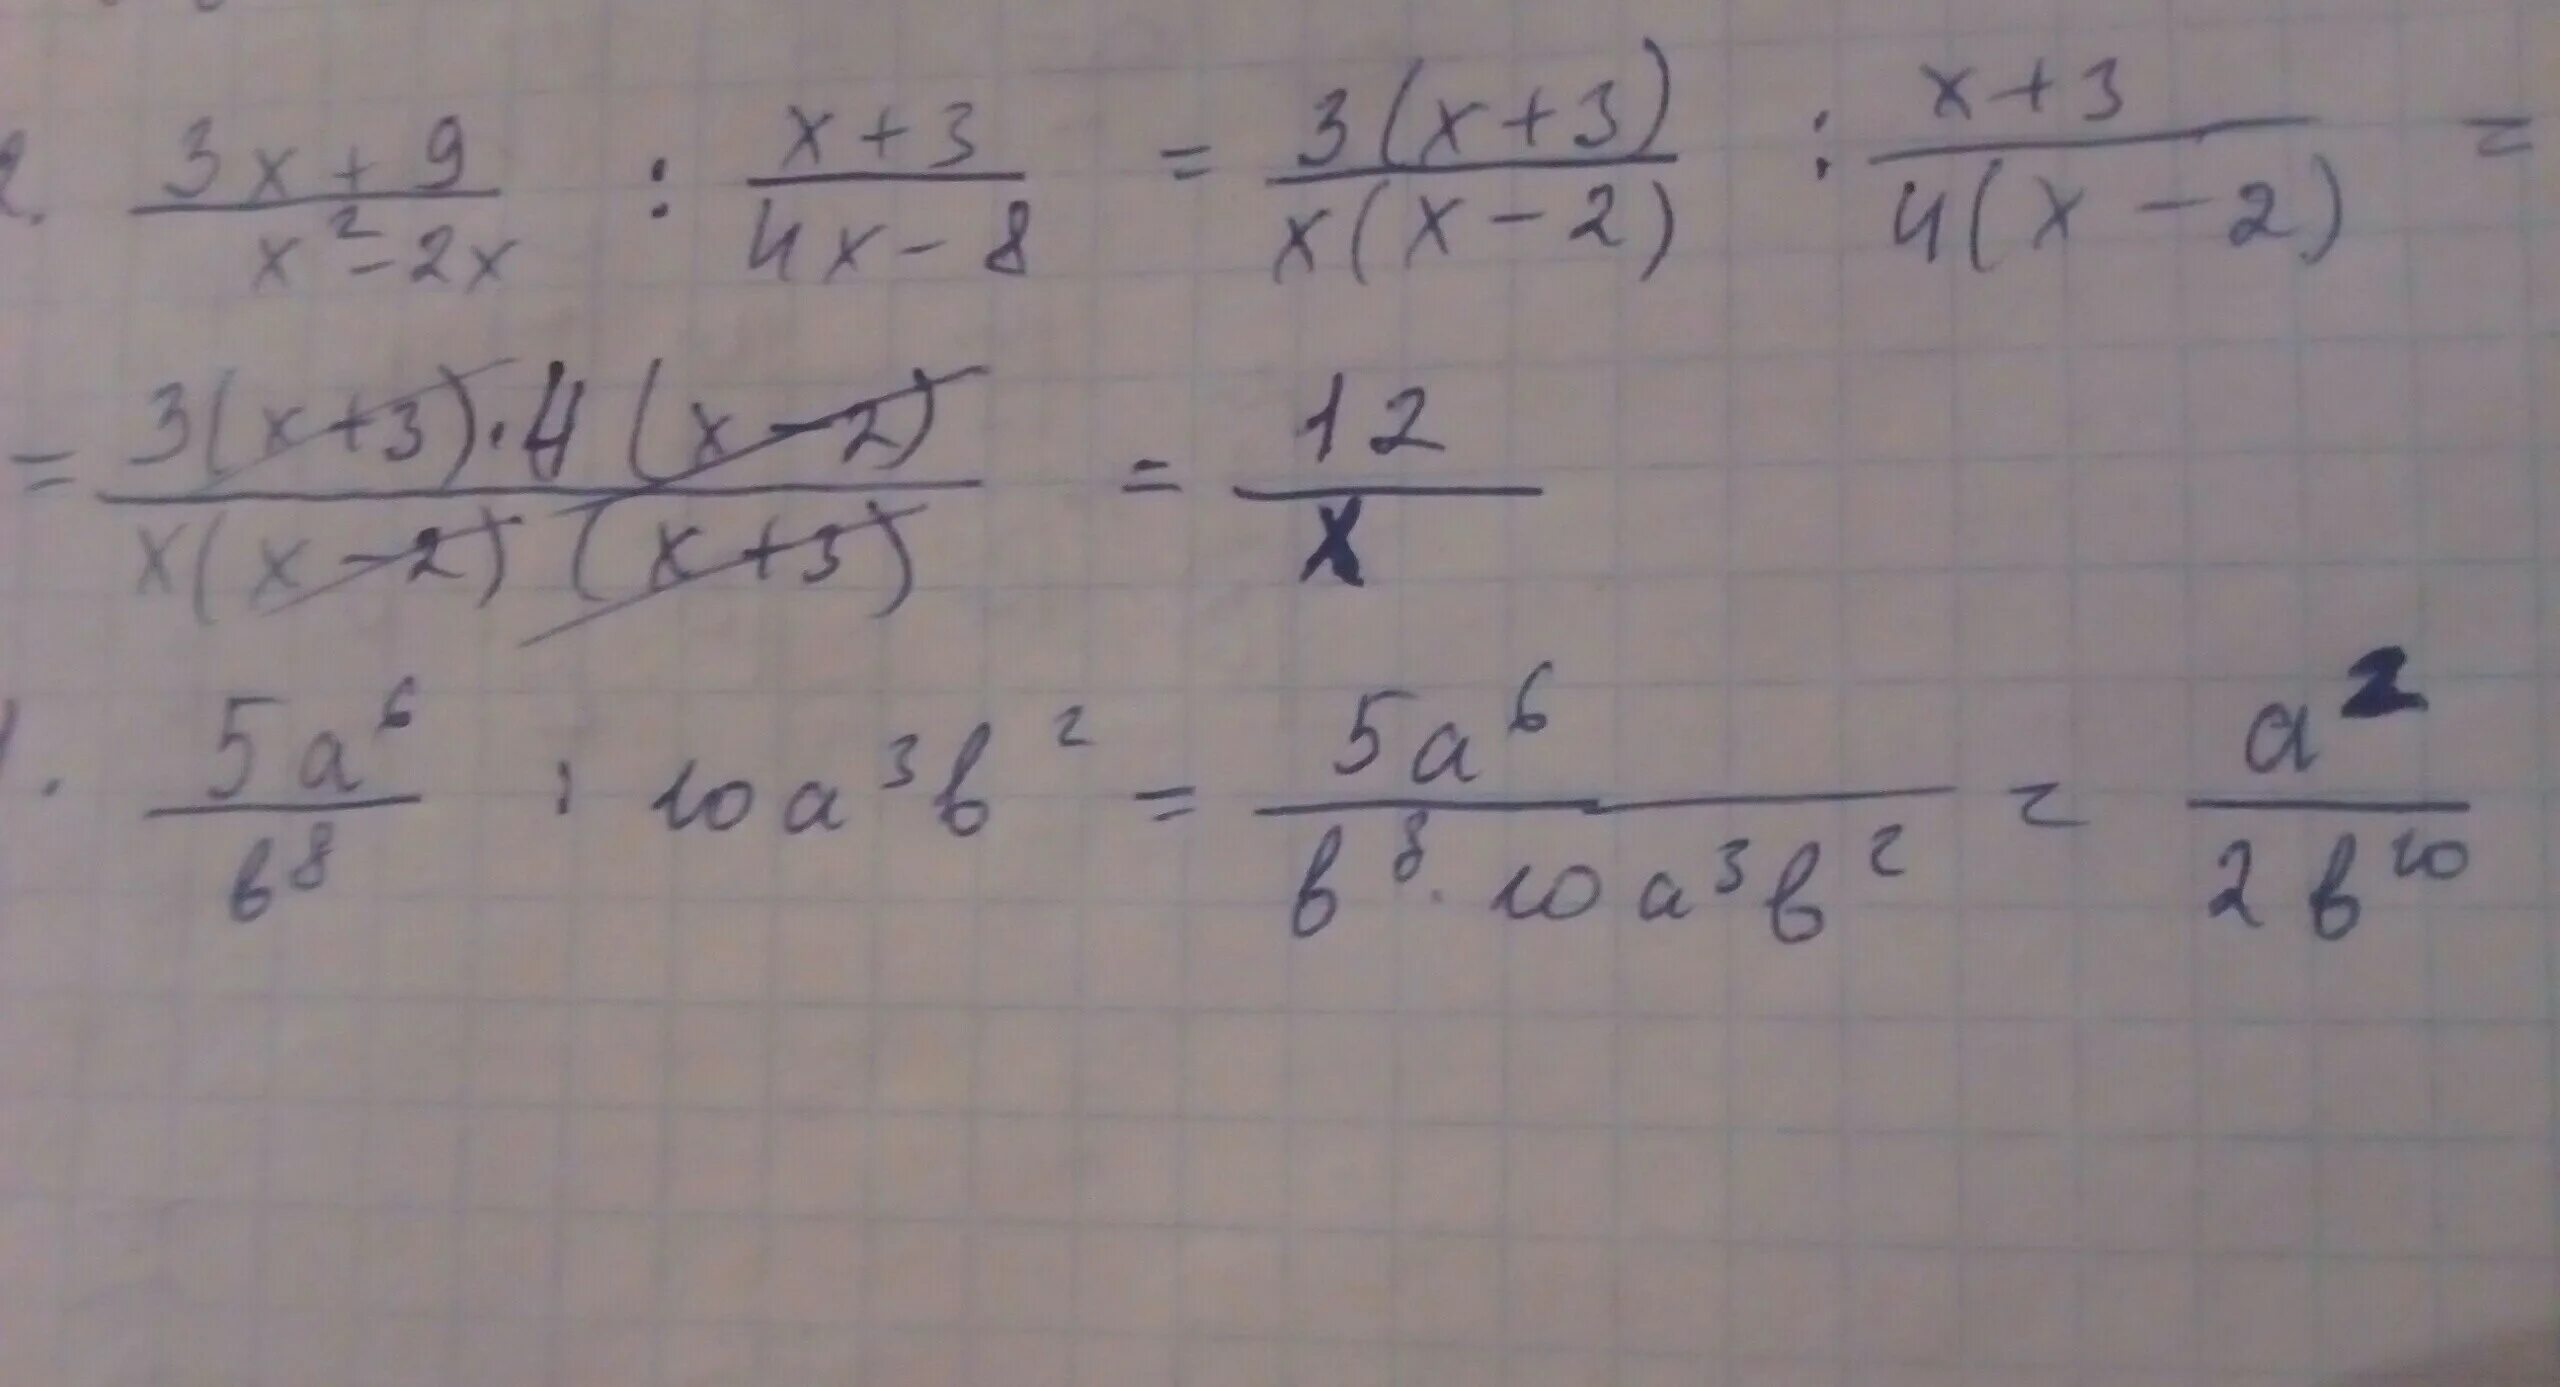 A 1 x 3a 1 0. (Х-3)(Х+3). 3/Х+2-5/Х-3 -9/2. Х+1/3=5/6. Упростите выражения -9(3x-1/9)+(x+4/9).